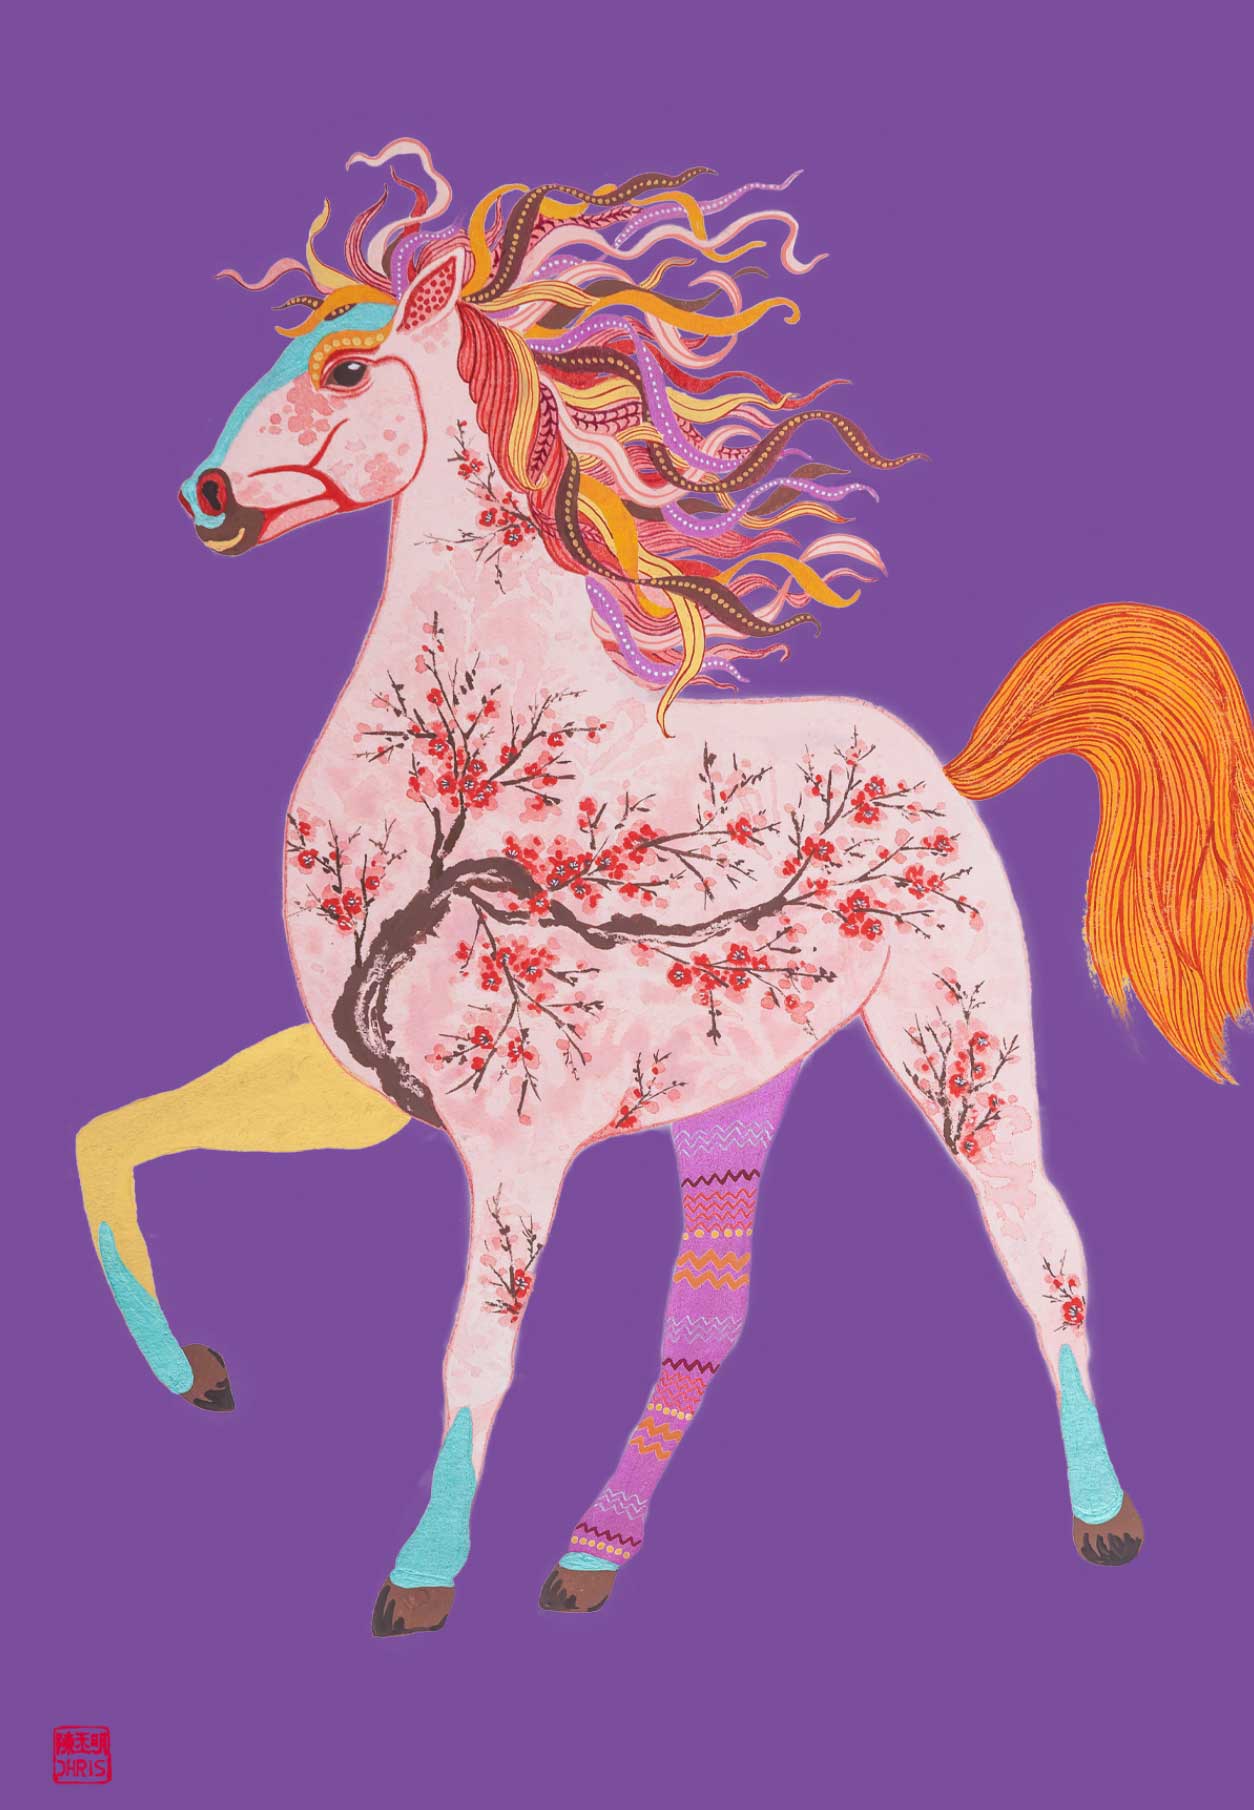 Chinese Zodiac Horse Print by Artist Chris Chun